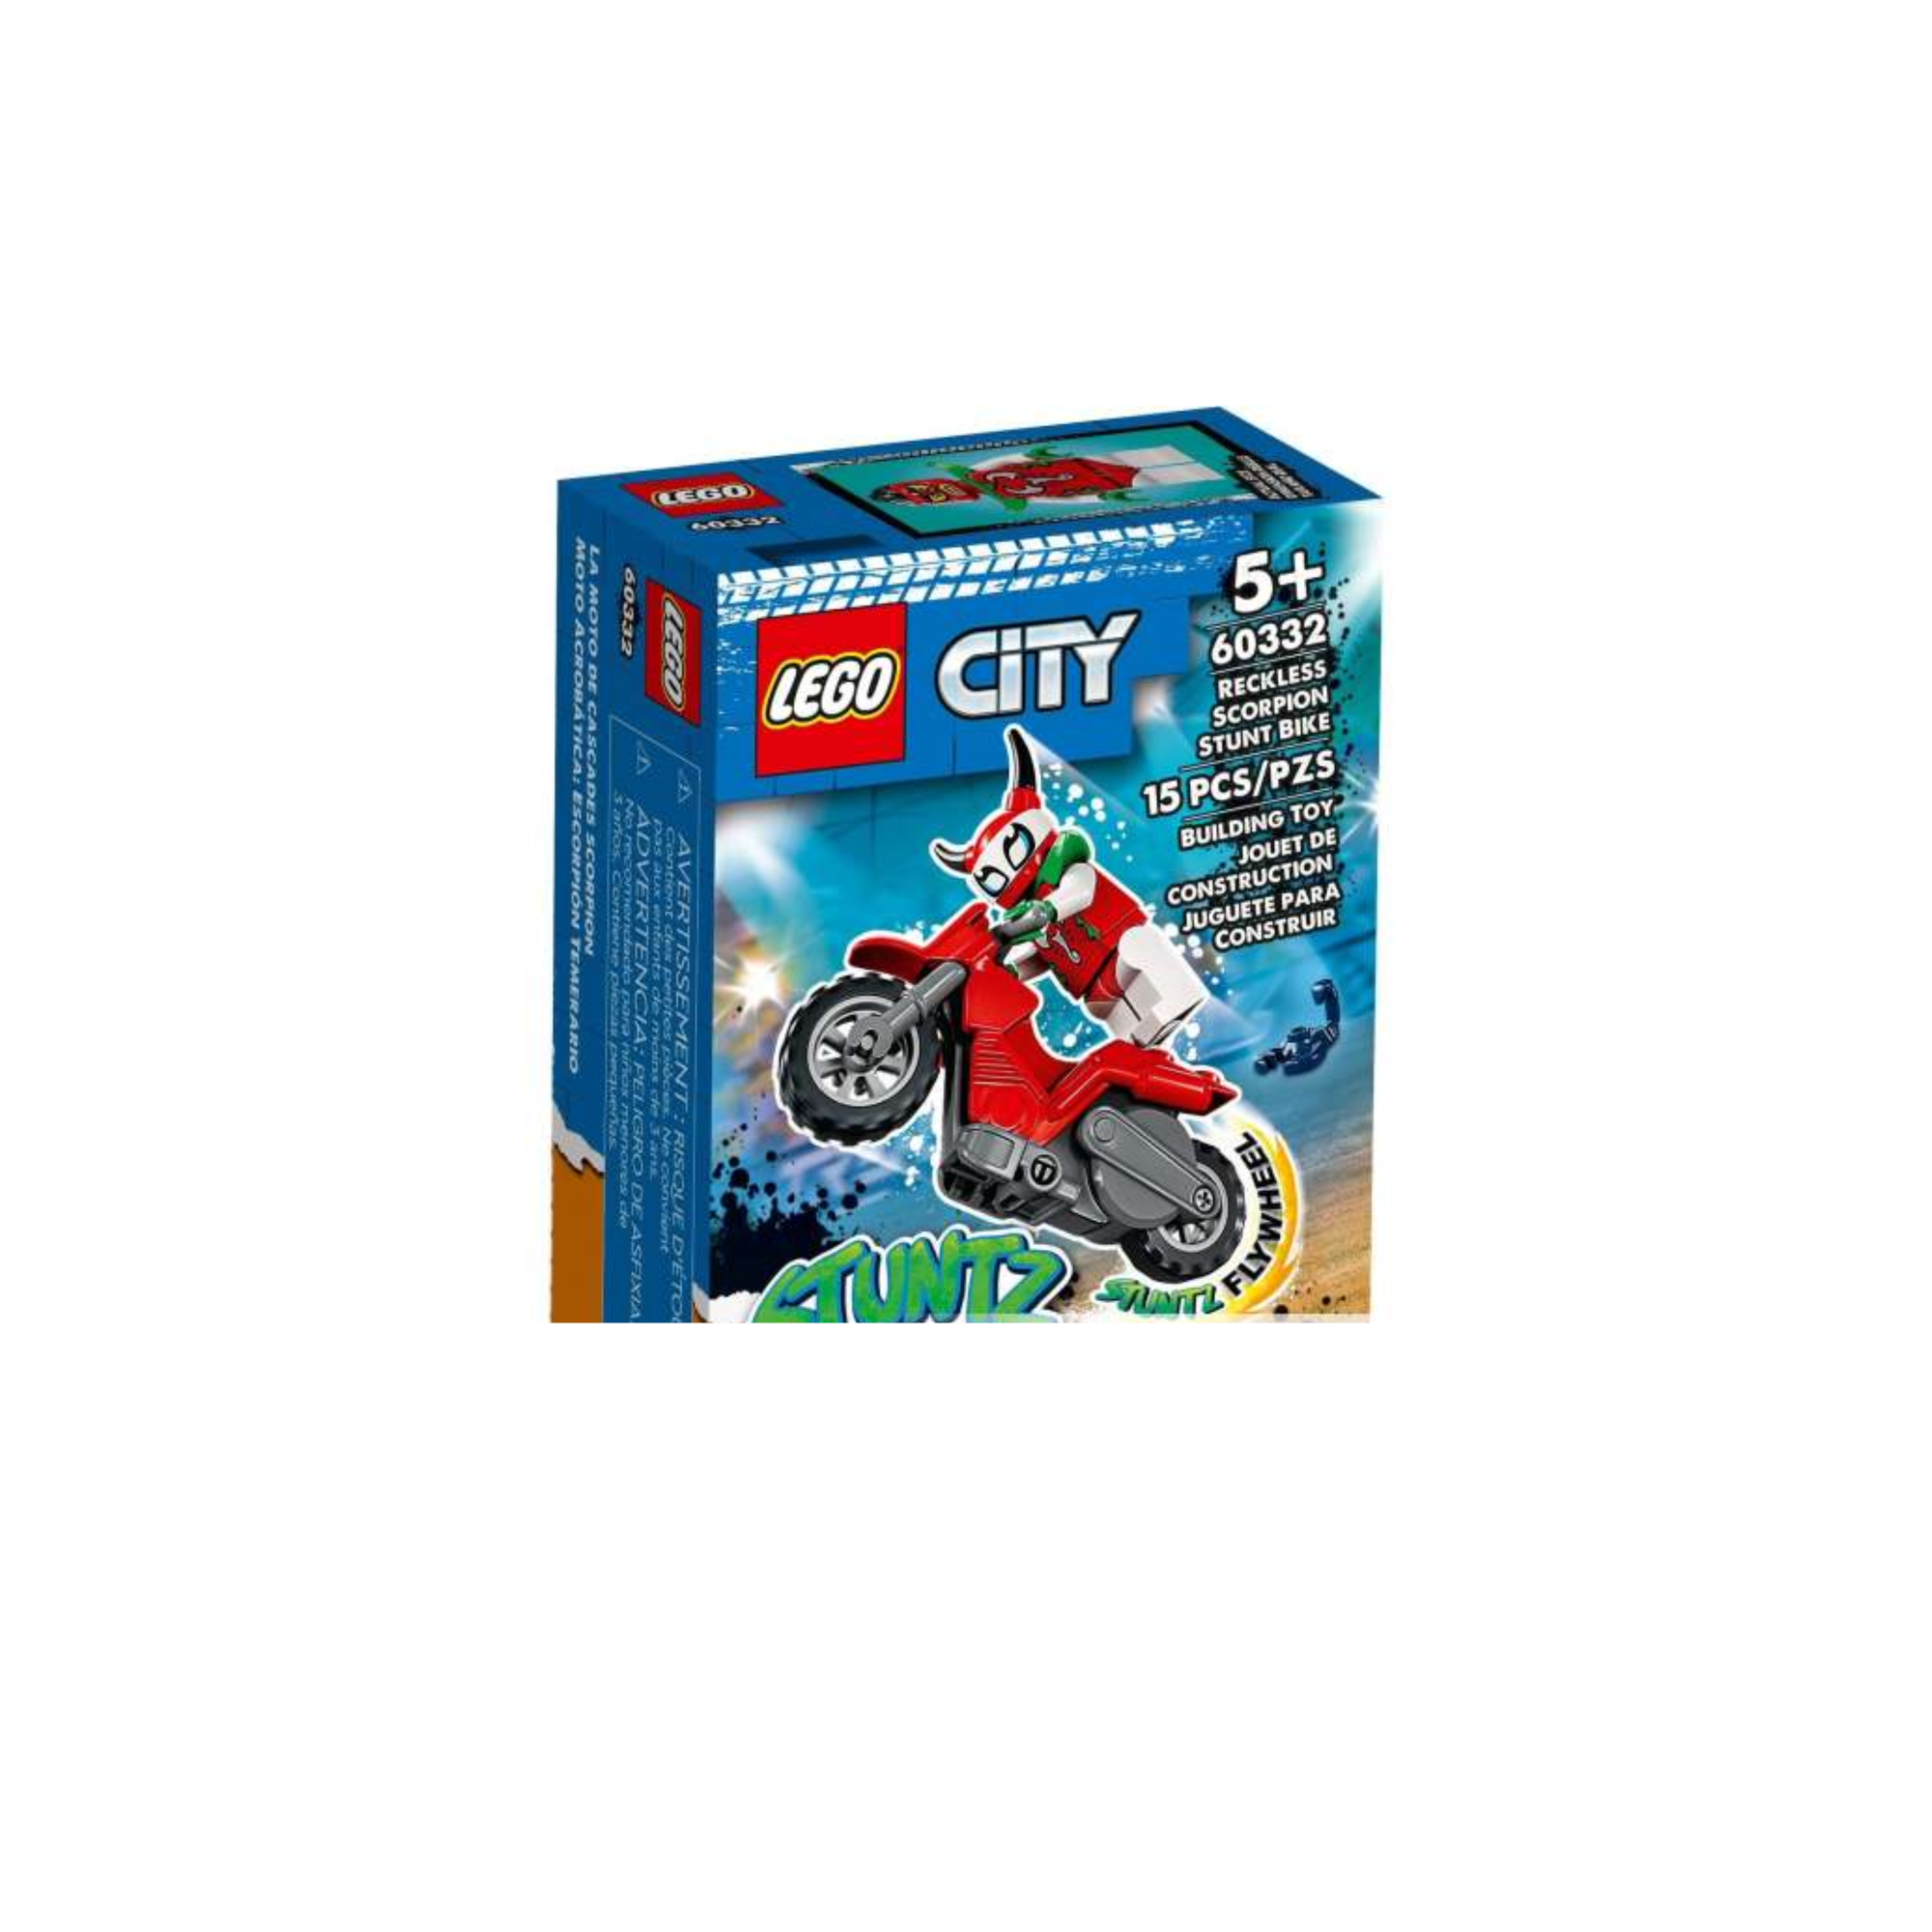 Lego City Reckless Scorpion Stunt Bike